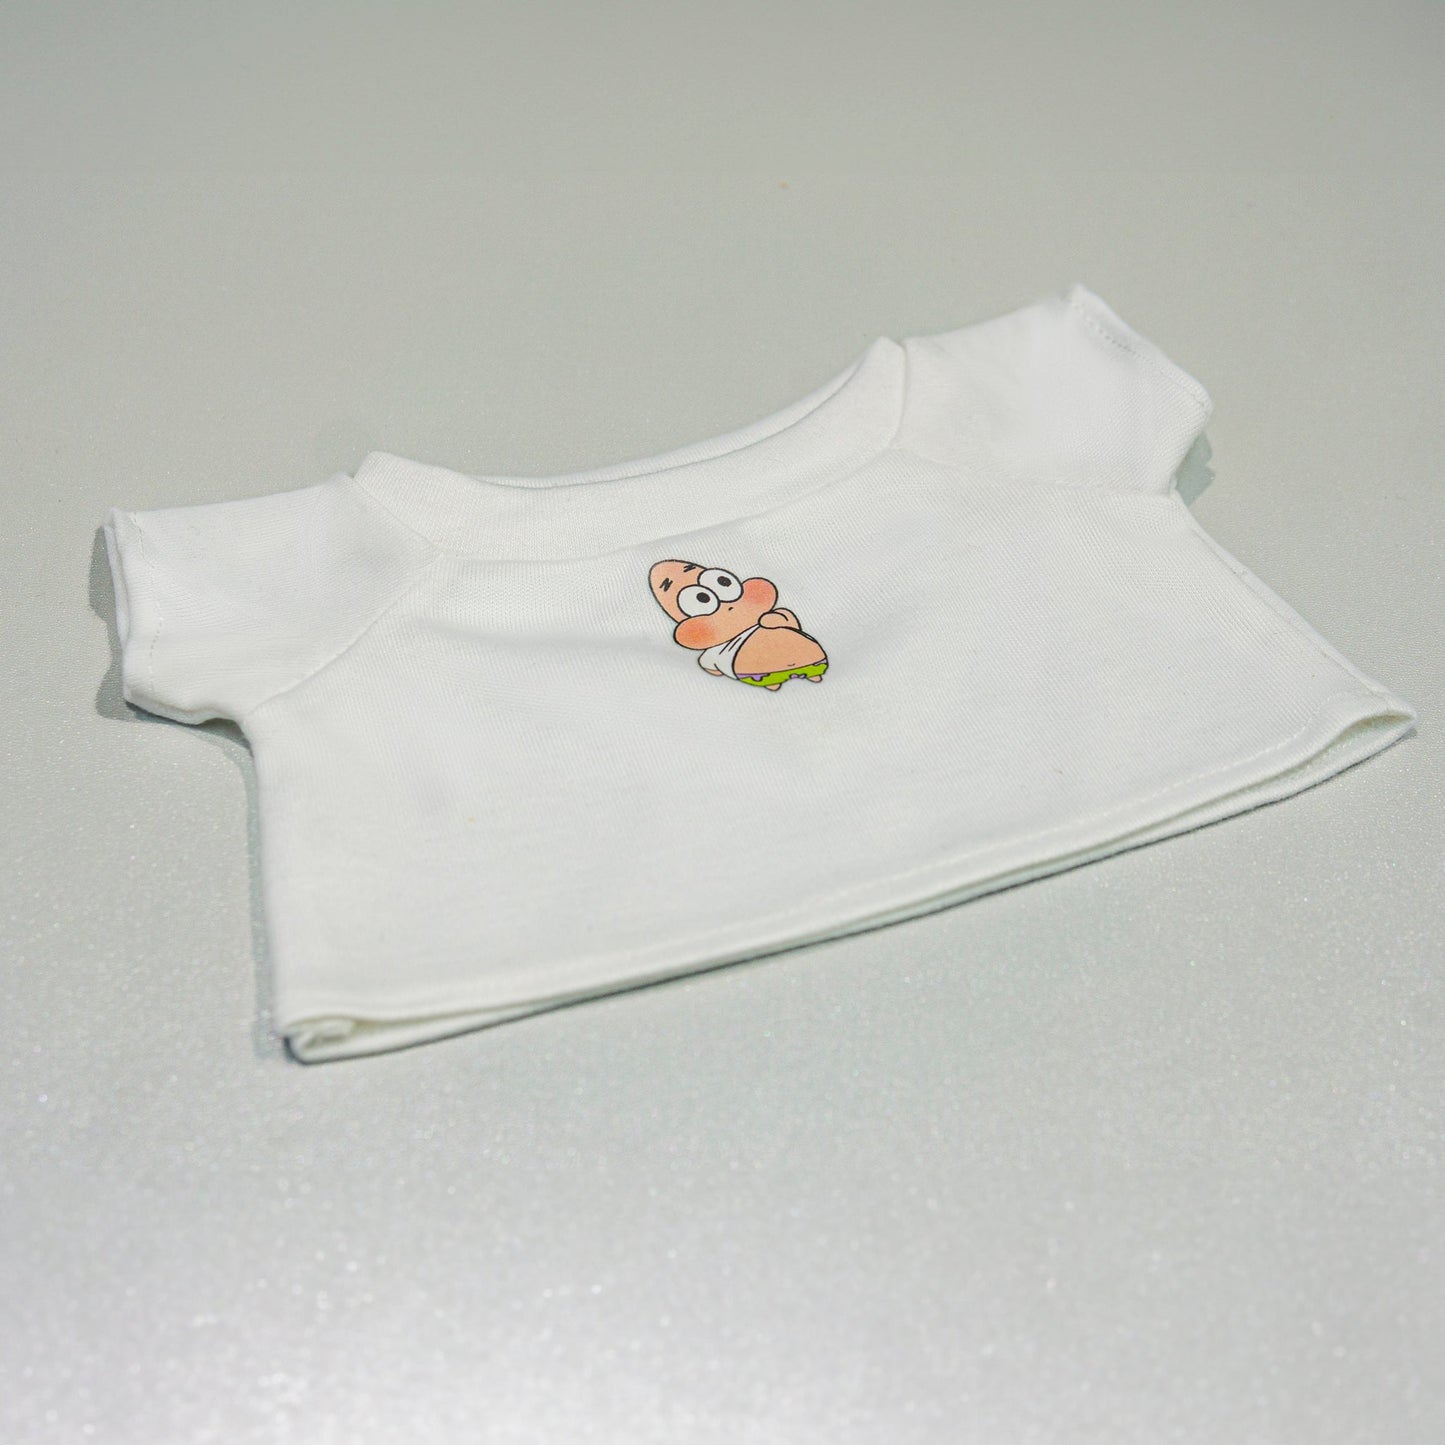 Puro Tiger Shark Plush Summer Short Sleeve Shirts - TOY-ACC-56201 - Hanjiangbancha - 42shops